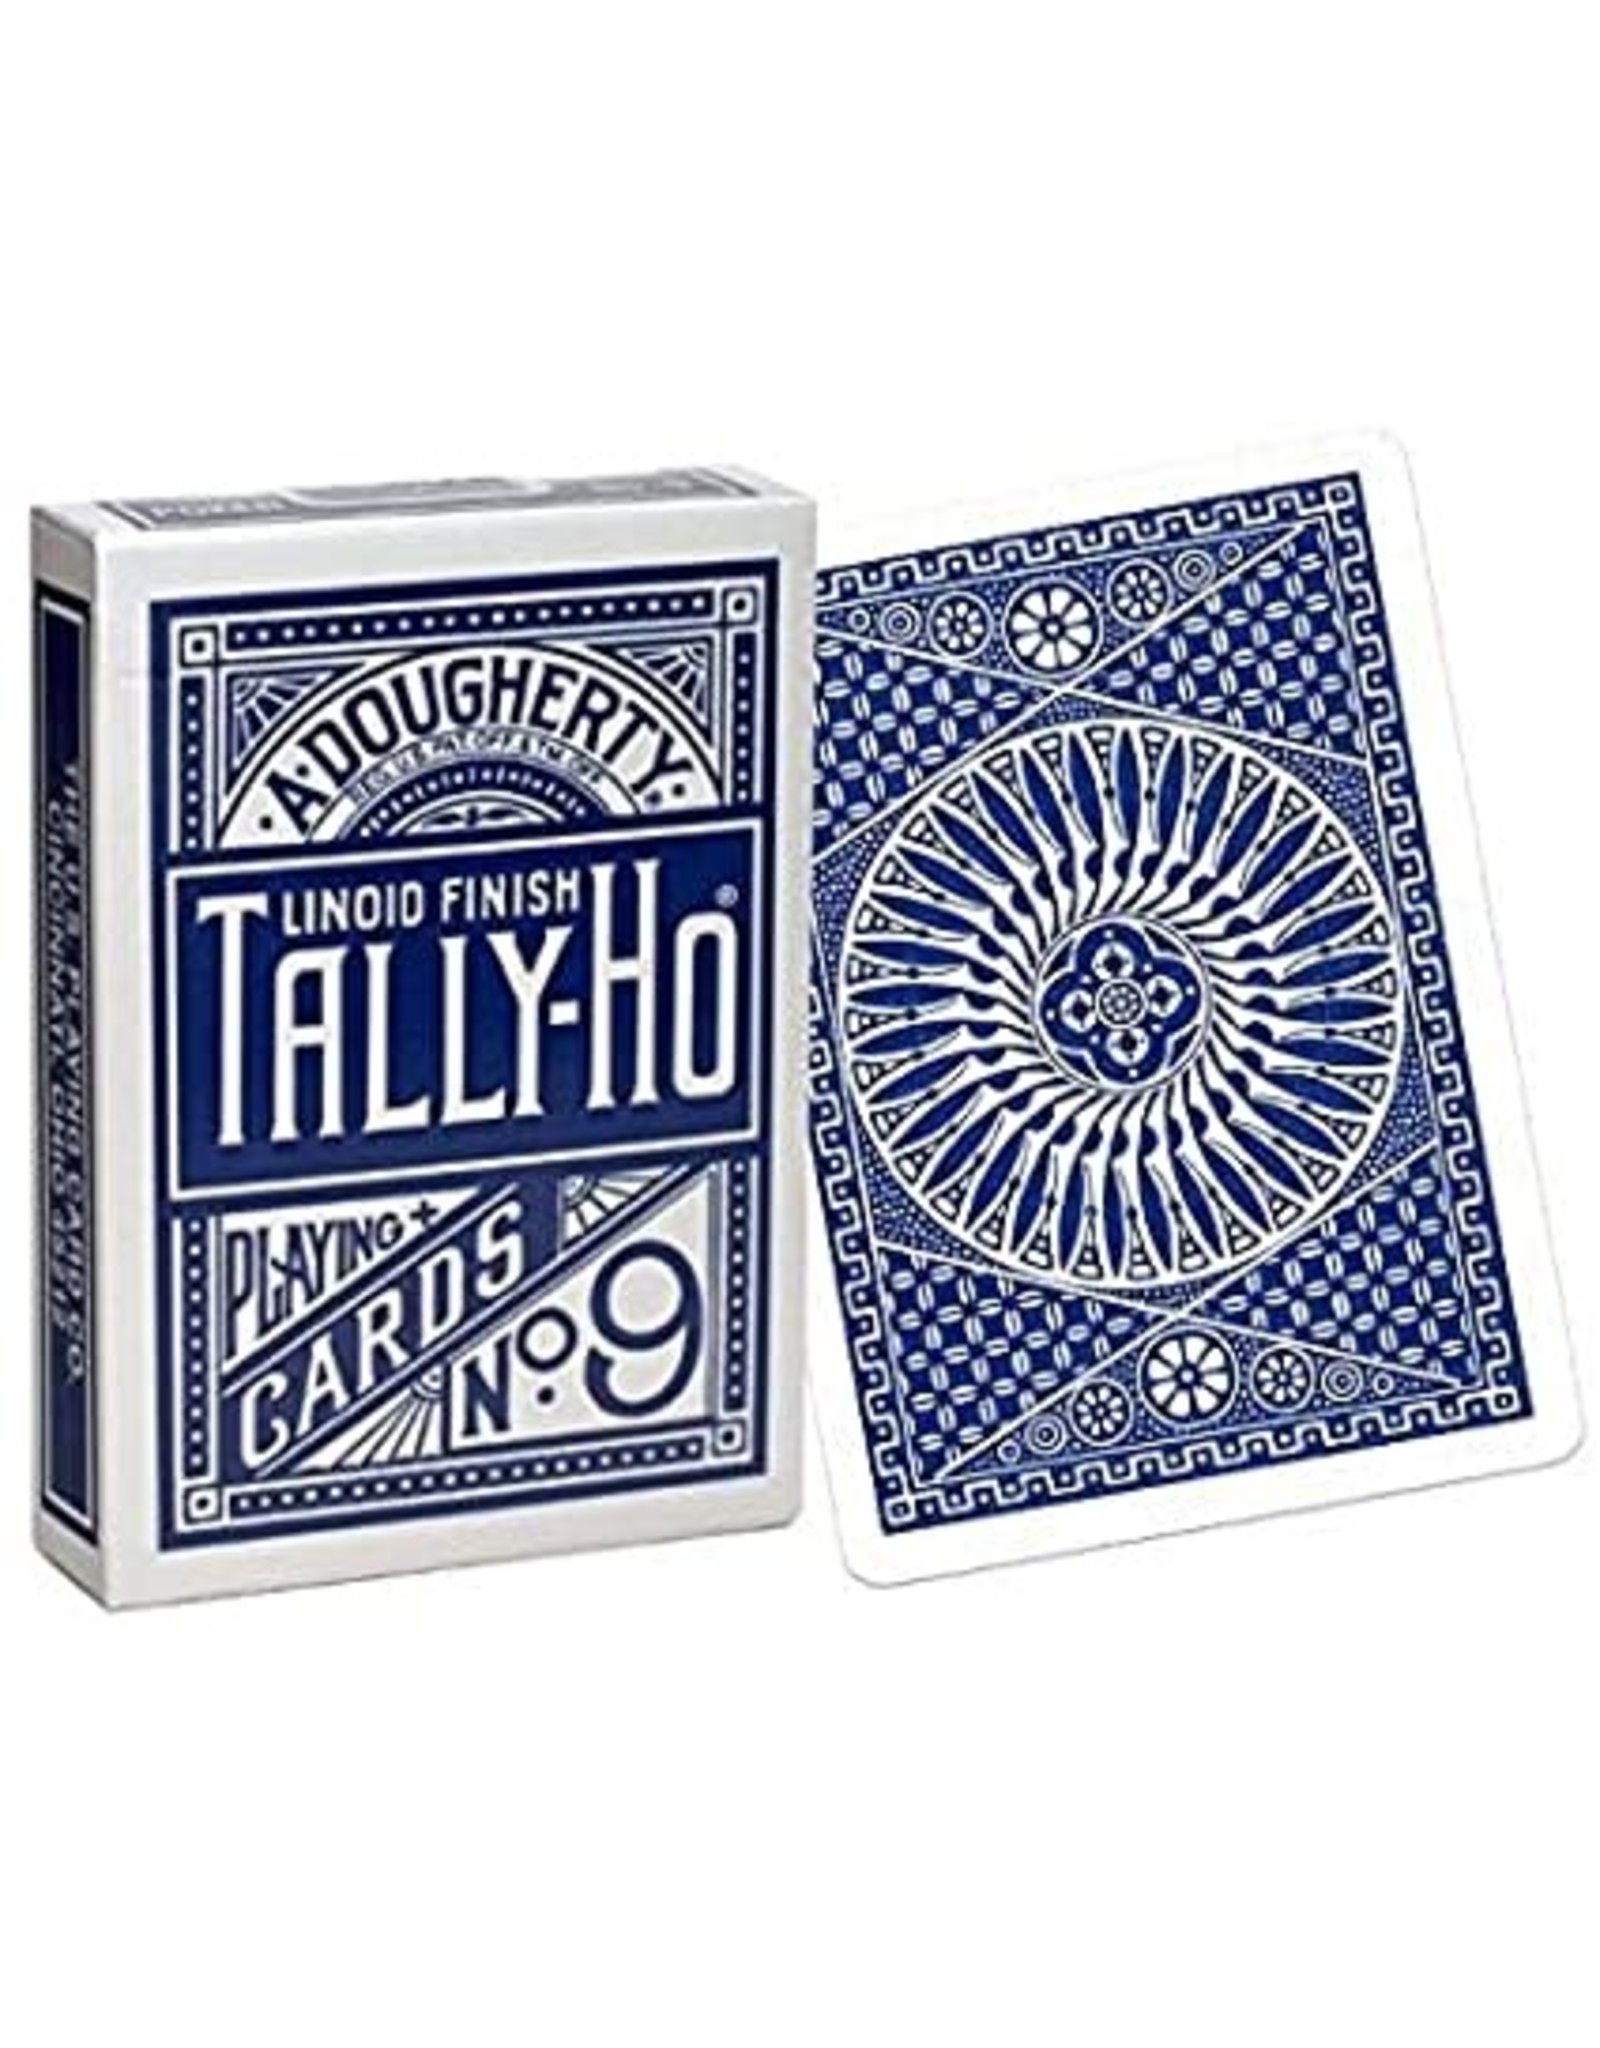 Theory 11 Playing Cards: Tally-Ho Circle Backs Blue